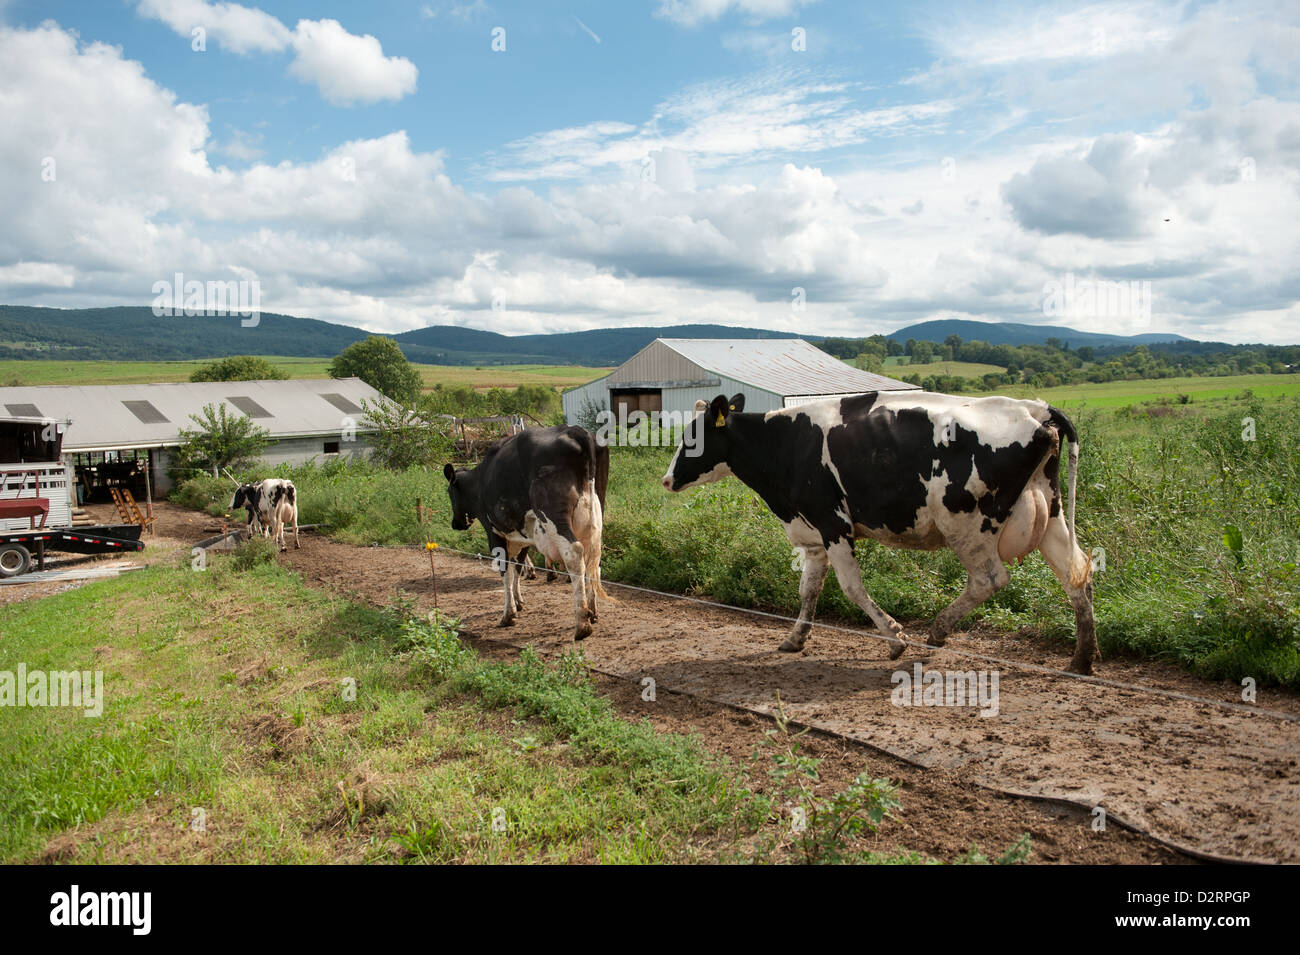 Dairy cows walking down dirt path on a farm  Stock Photo